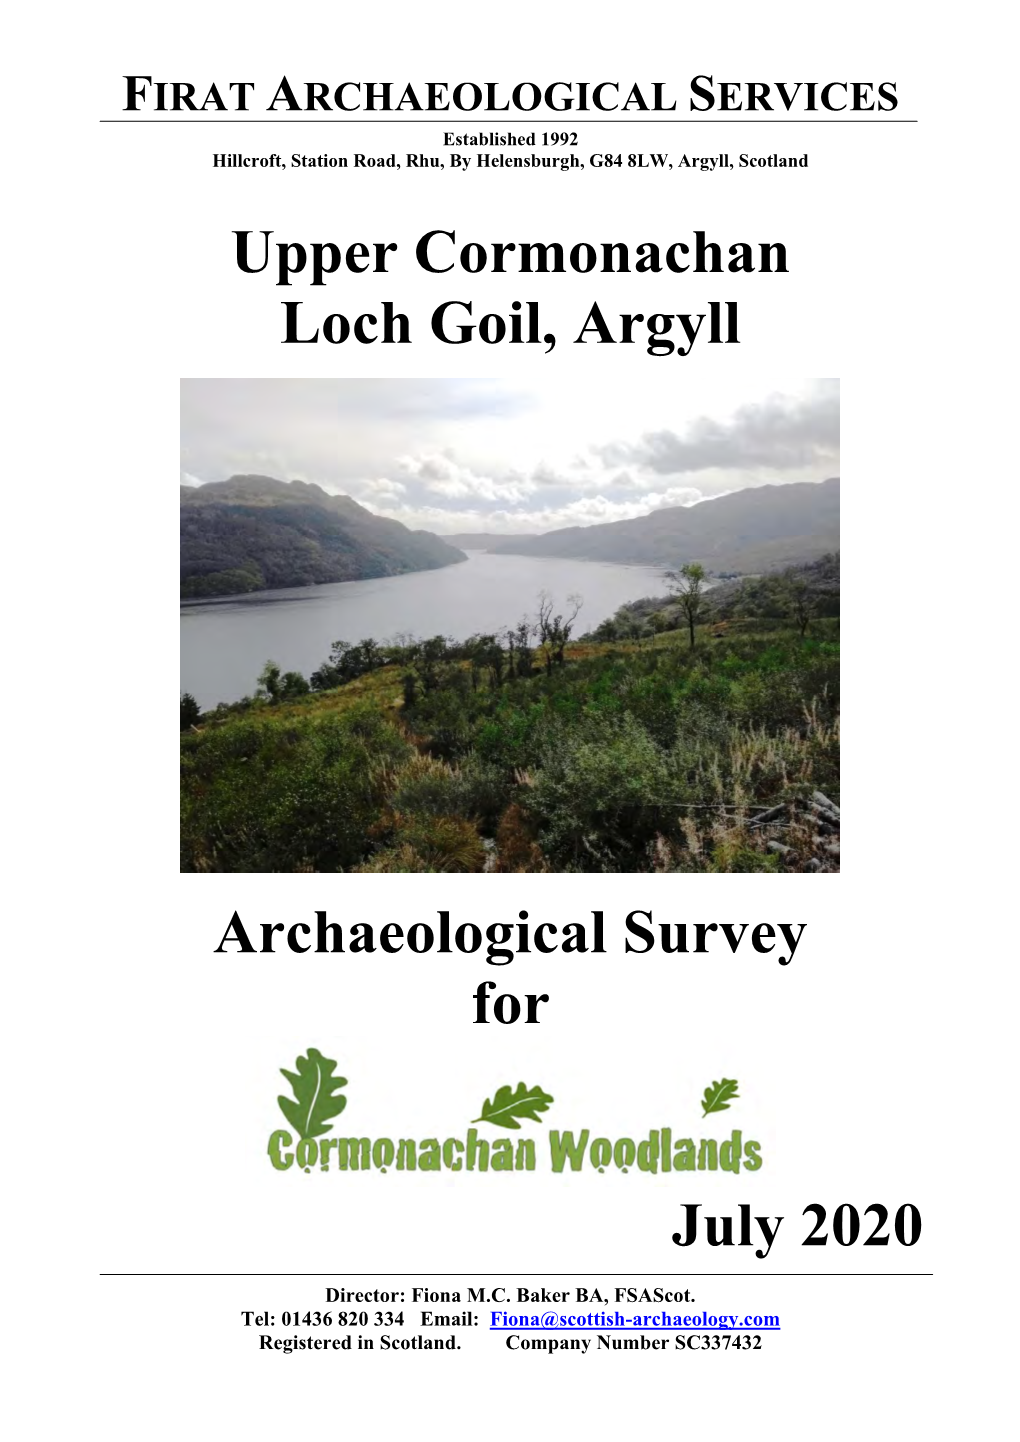 Upper Cormonachan Loch Goil, Argyll Archaeological Survey for July 2020